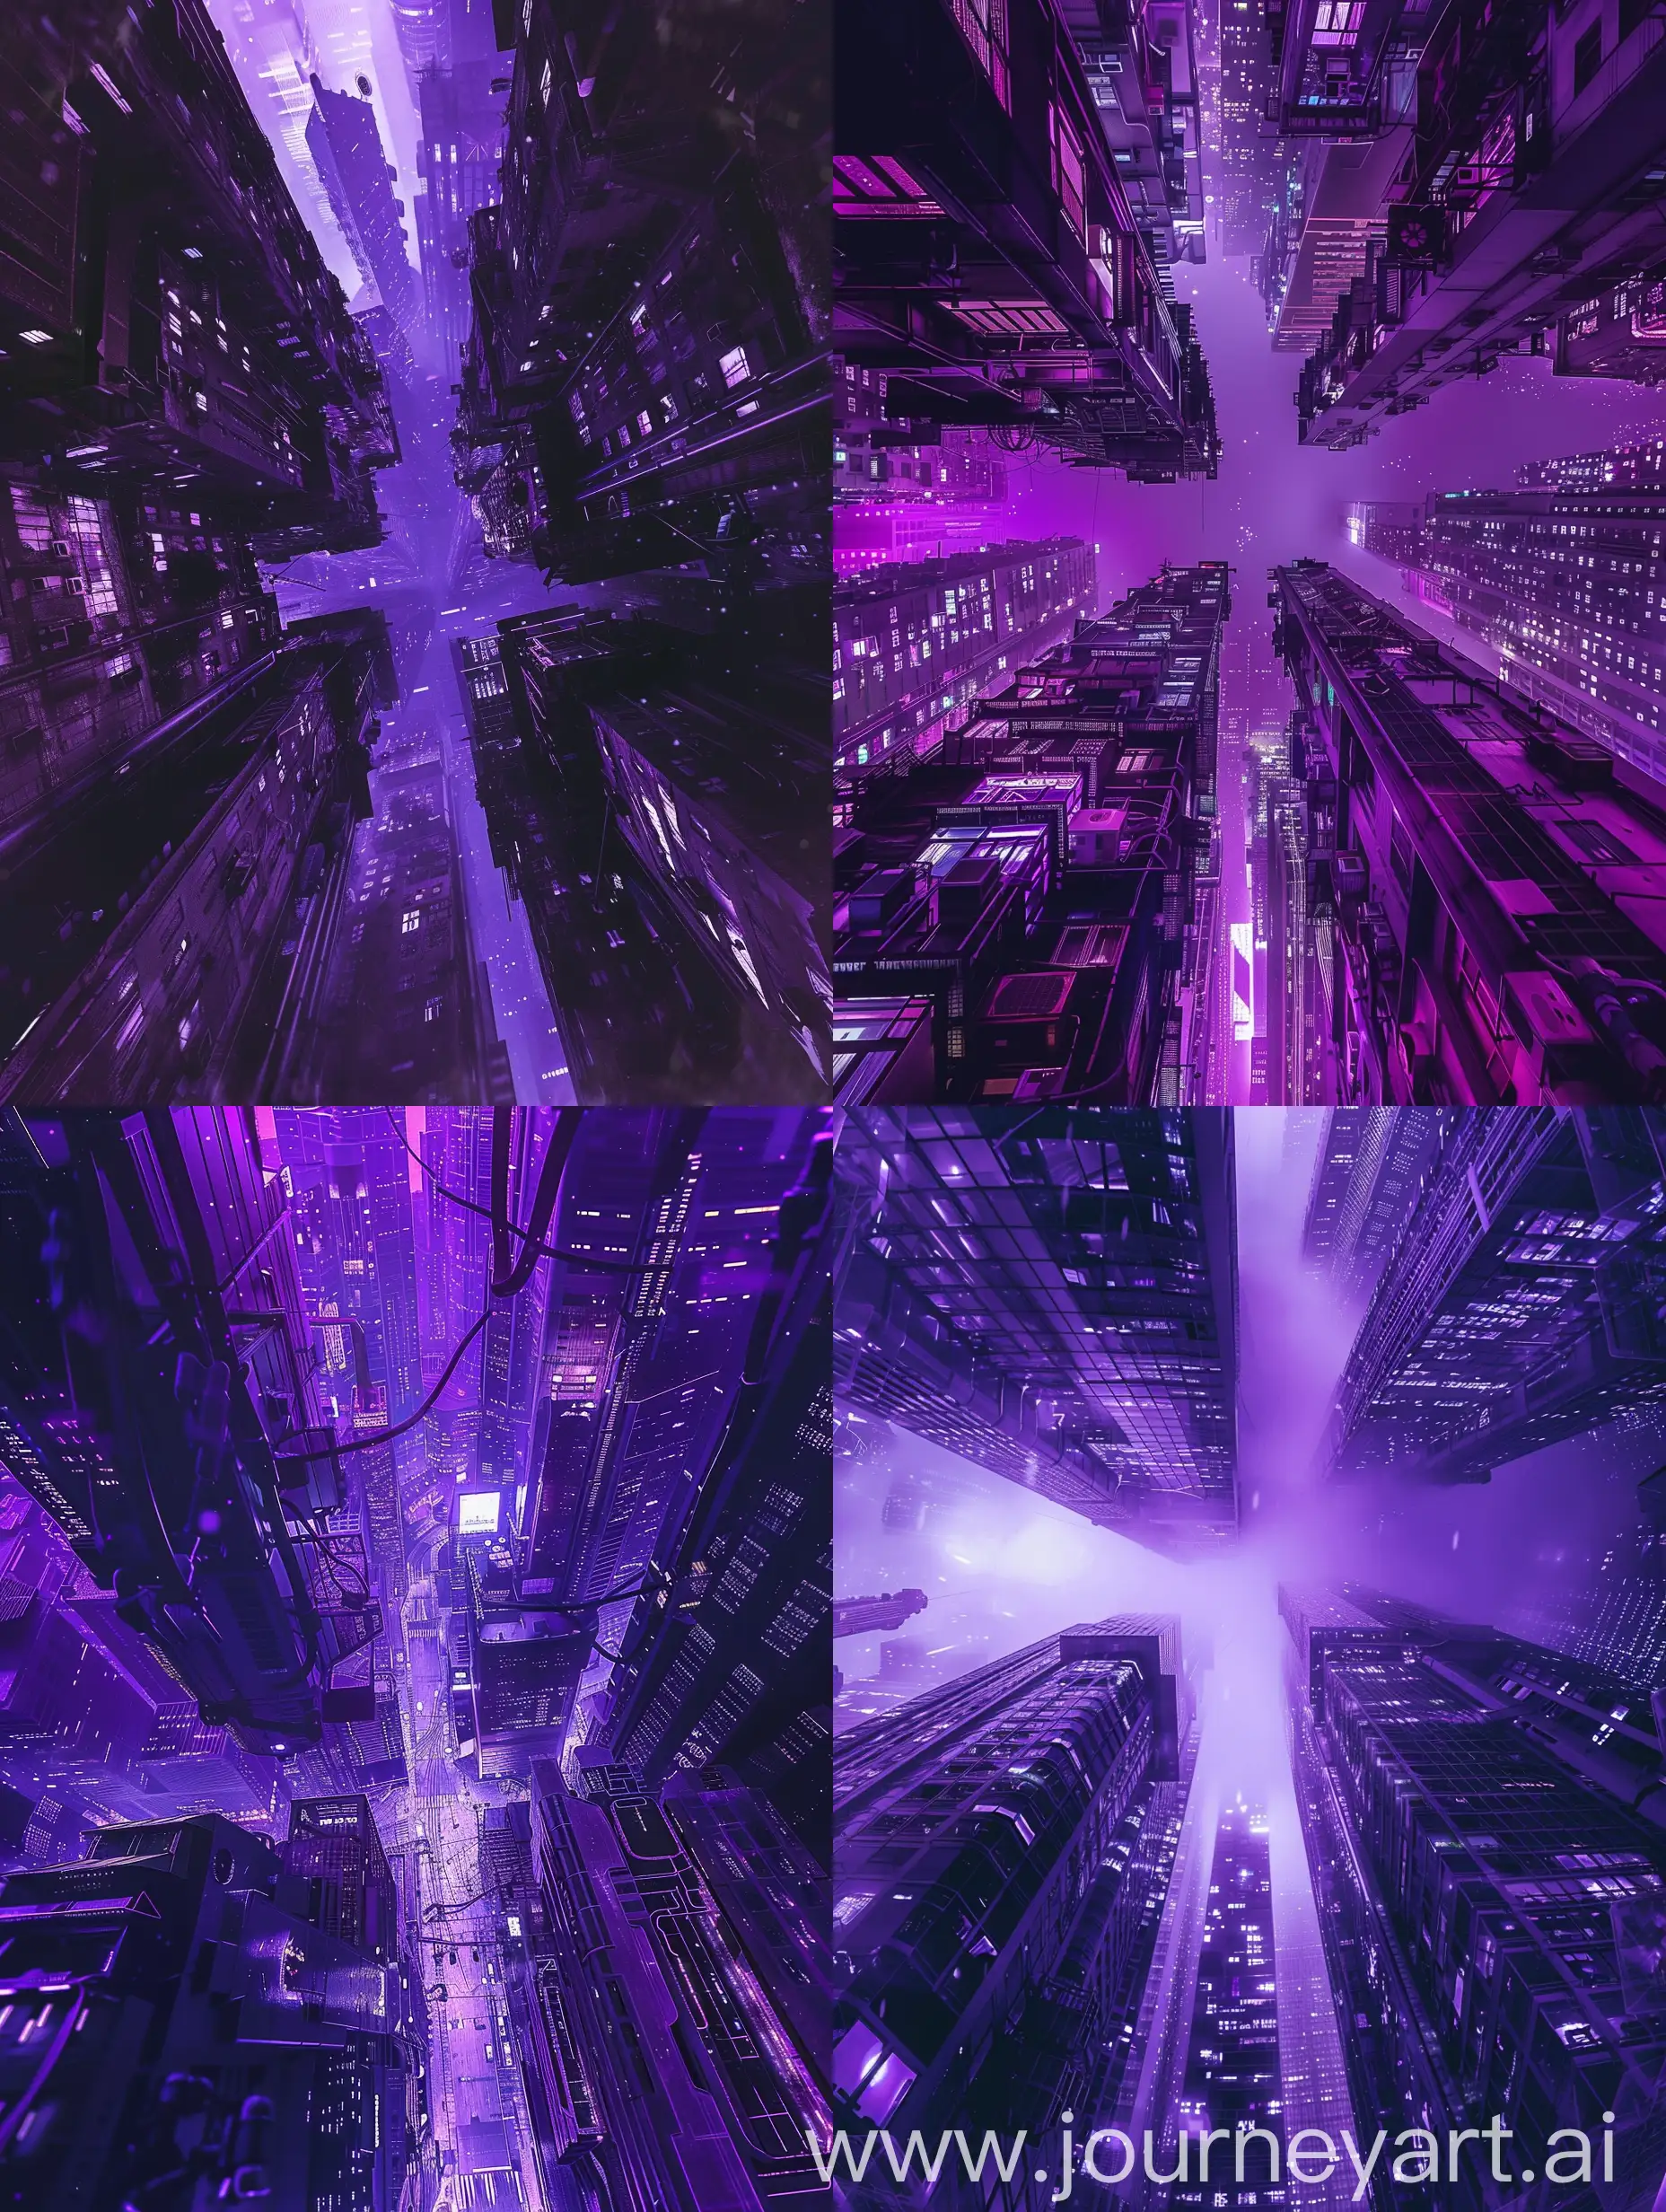 Futuristic-Cyberpunk-Cityscape-at-Night-with-Purple-Hues